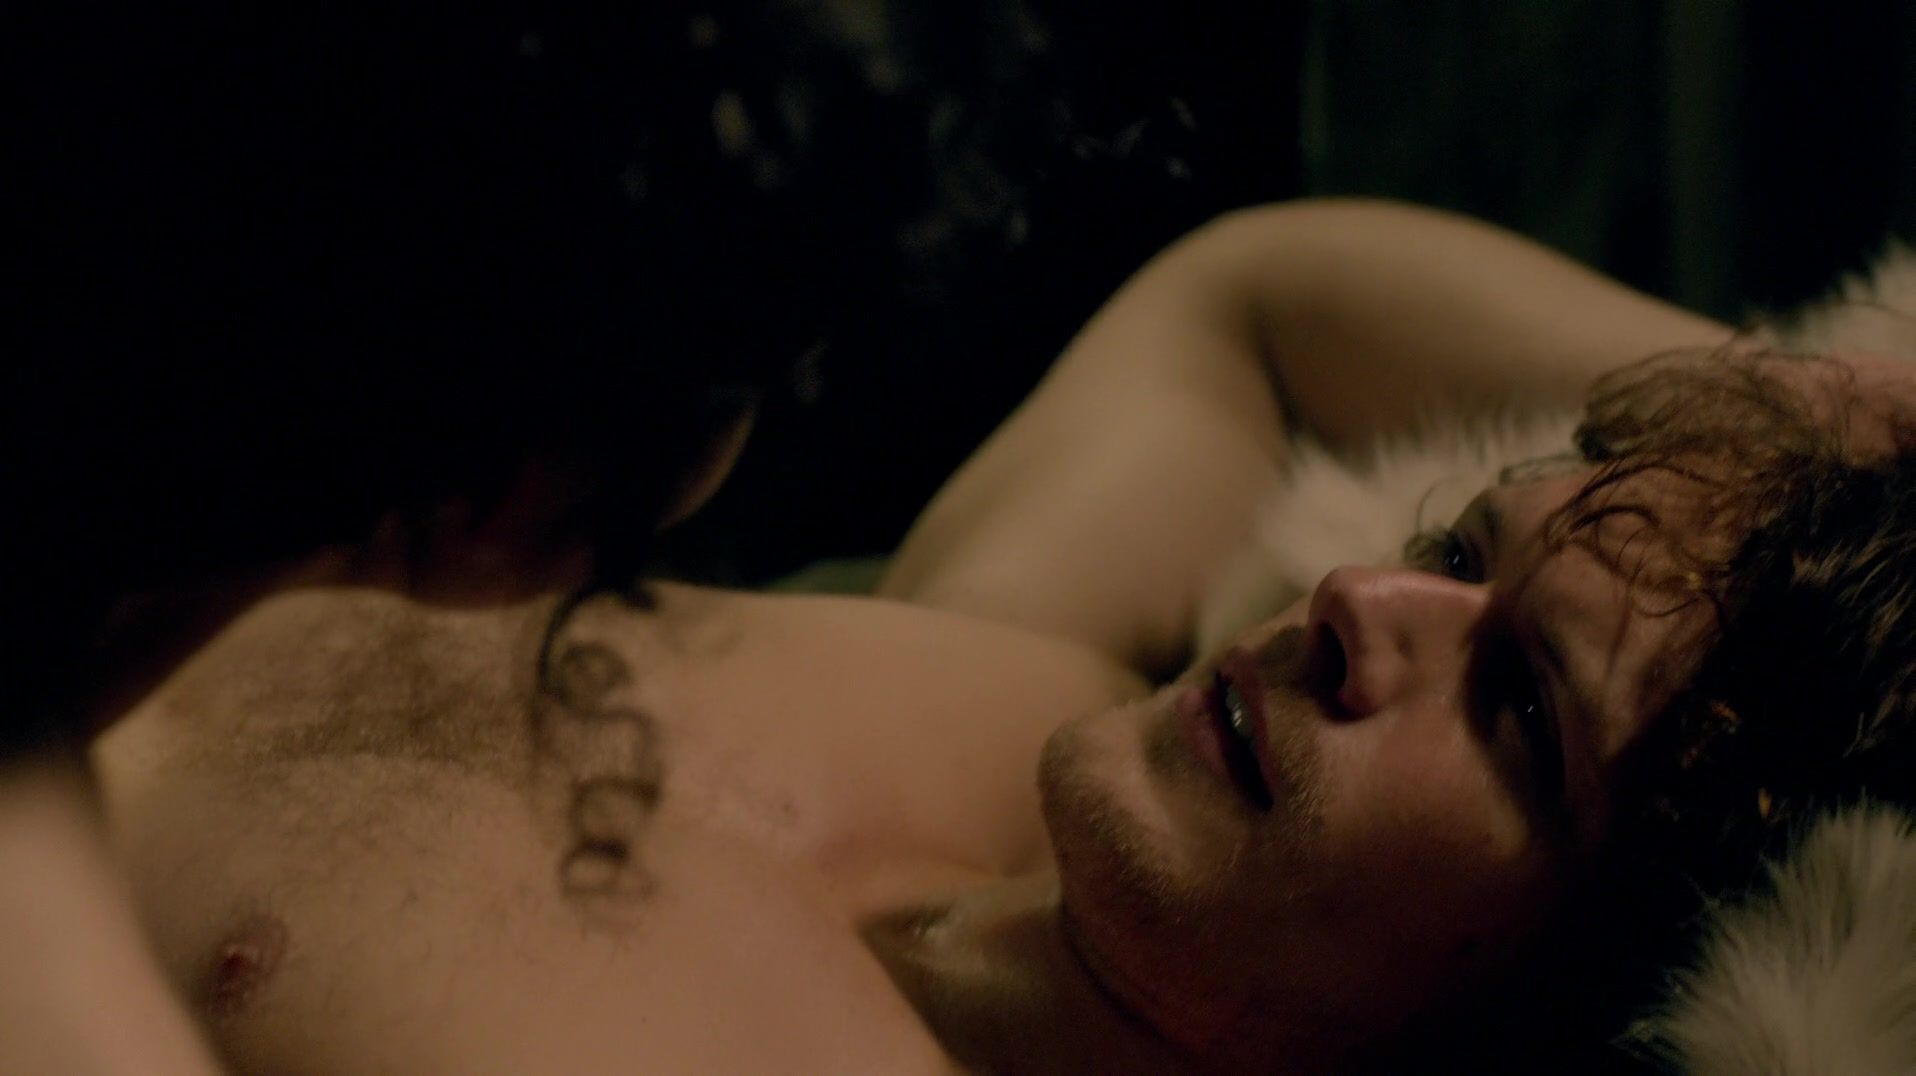 Publico Sex scene of naked Caitriona Balfe | TV show "Outlander" From